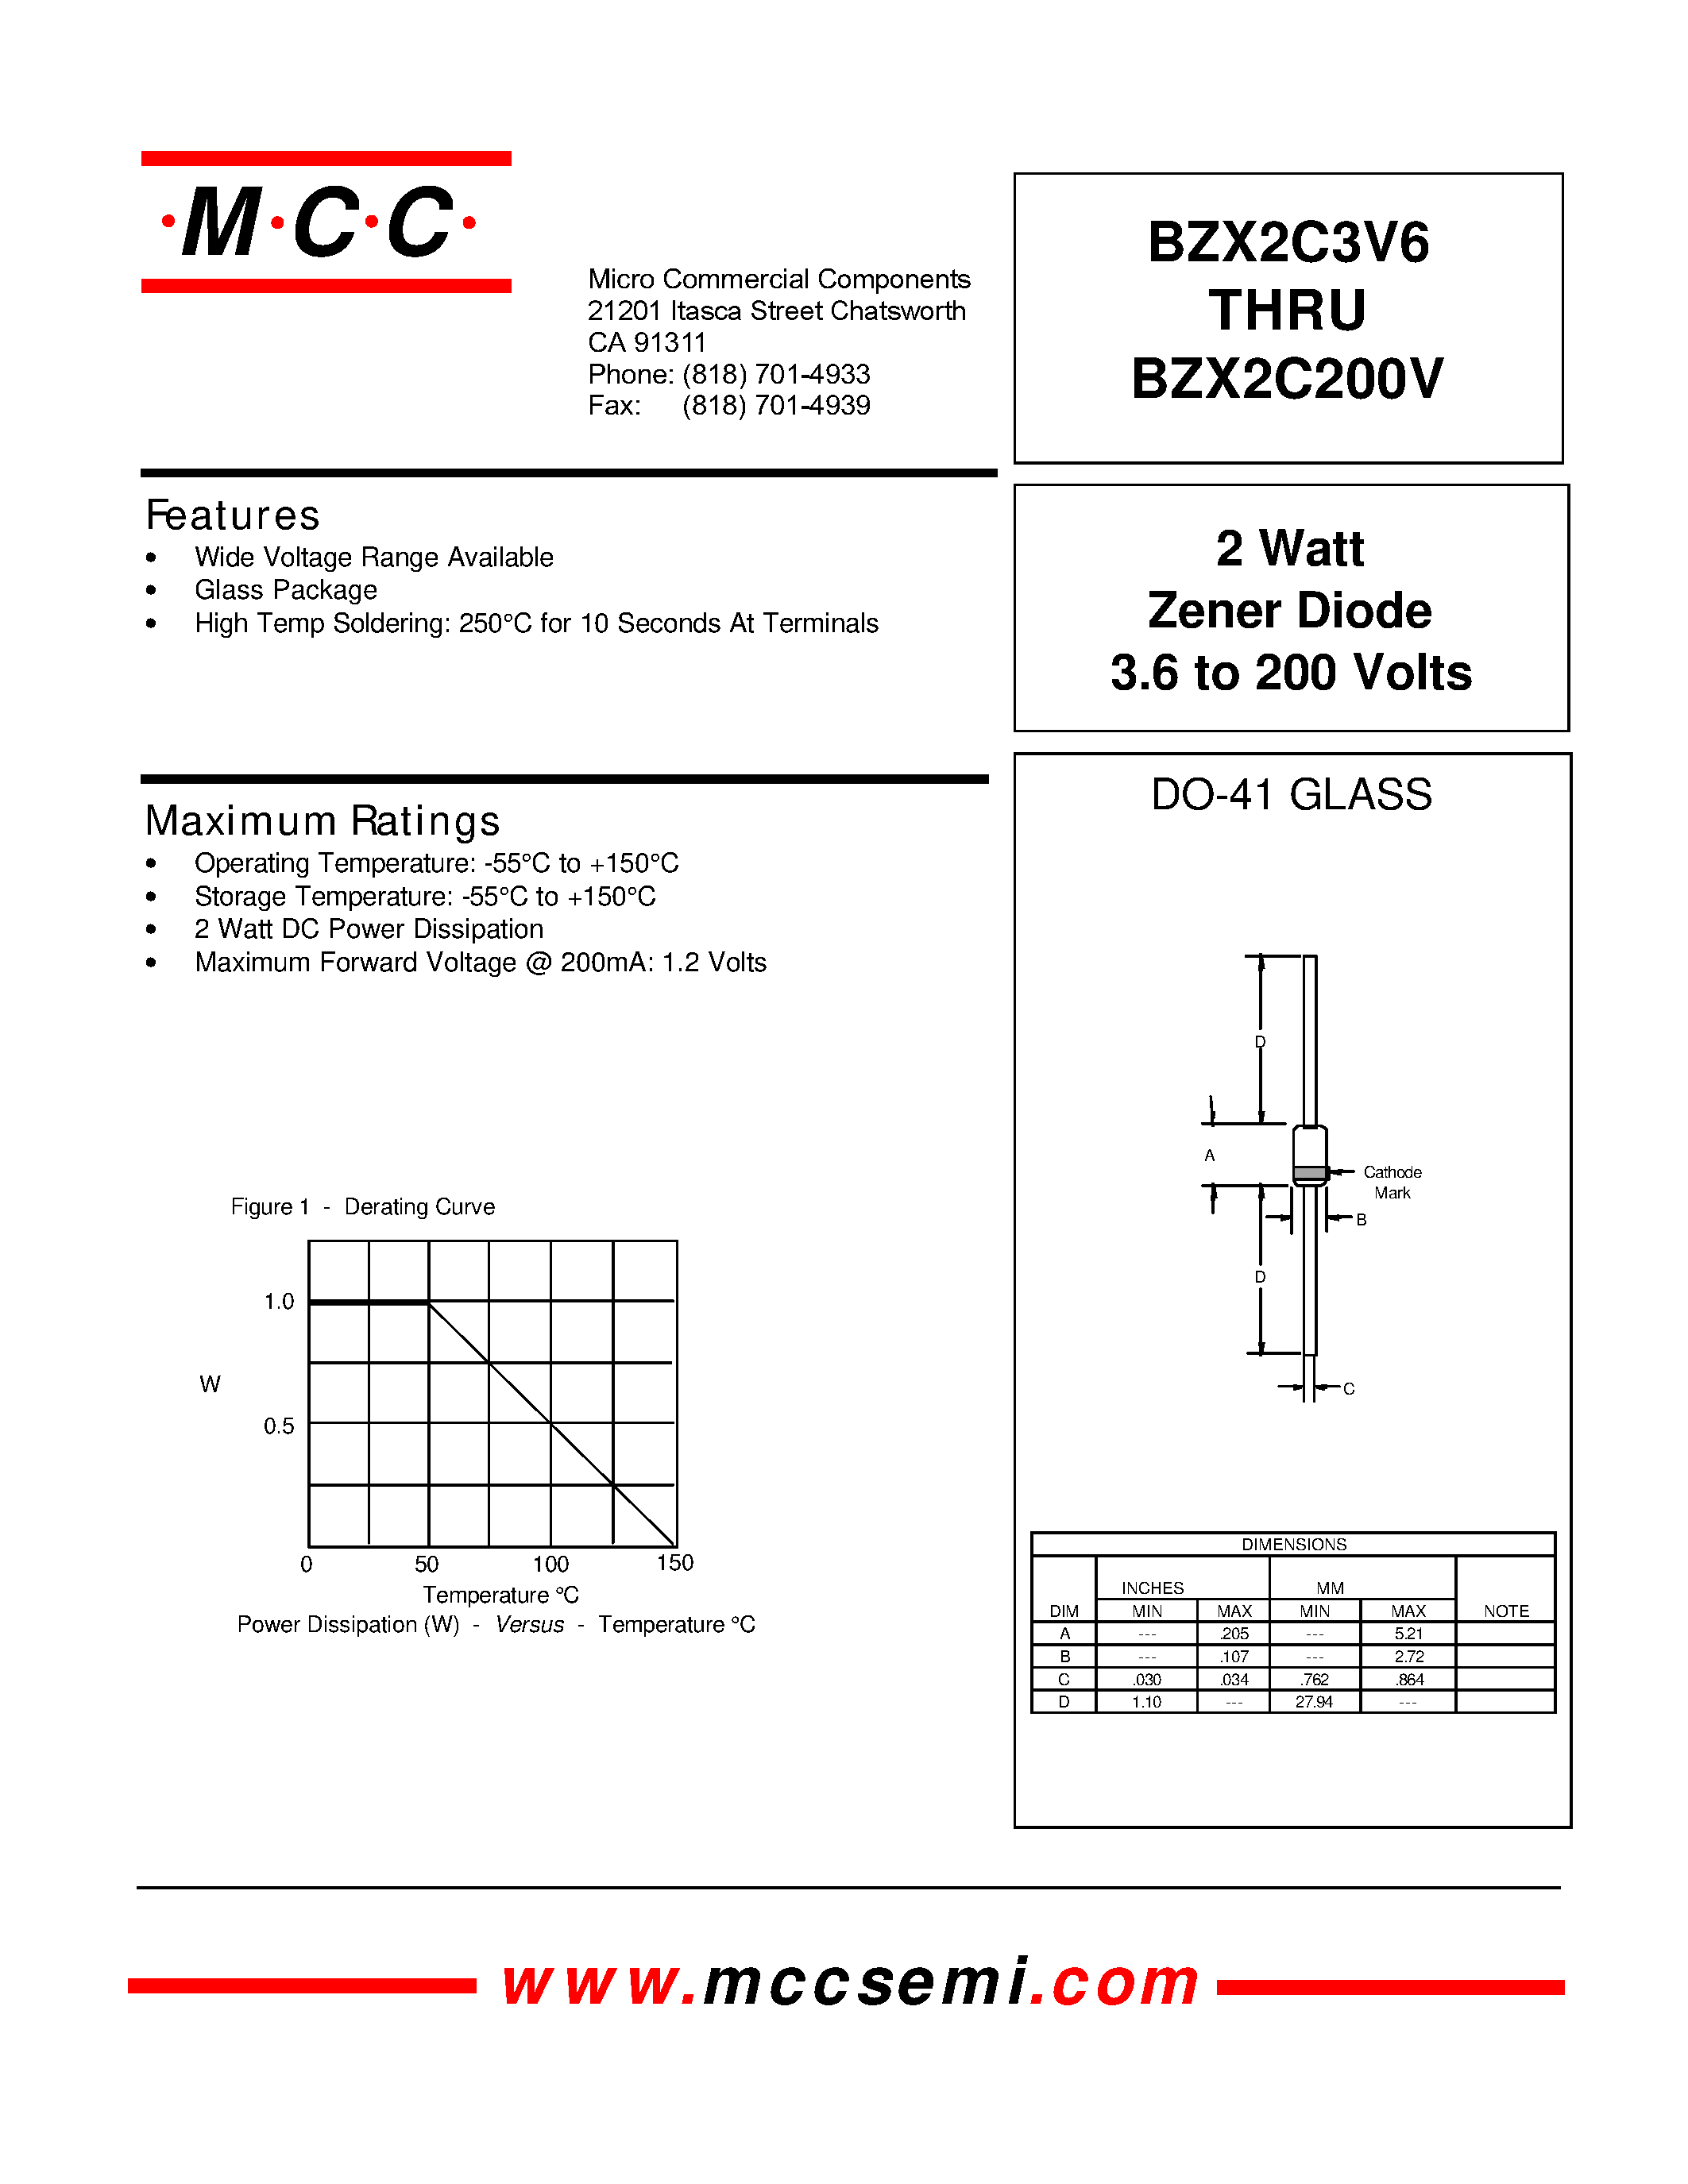 Даташит BZX2C68V-2 Watt Zener Diode 3.6 to 200 Volts страница 1